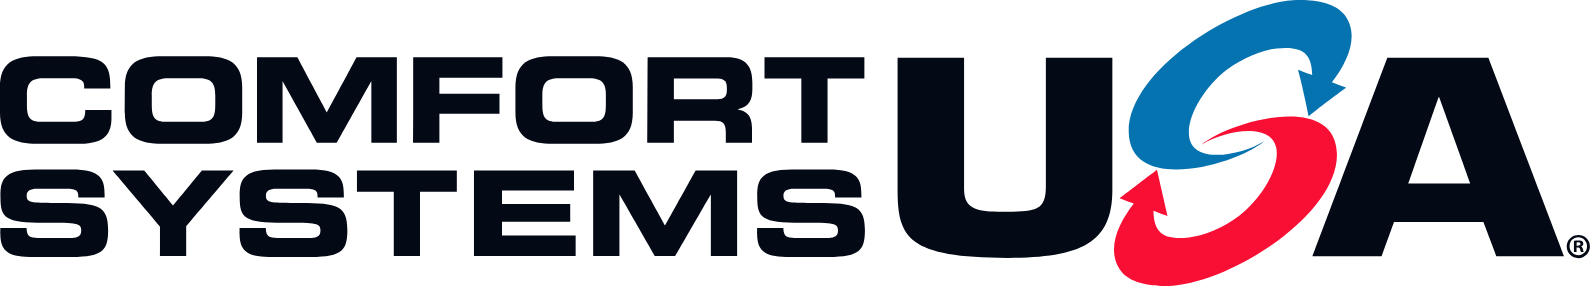 Comfort Systems logo large (transparent PNG)